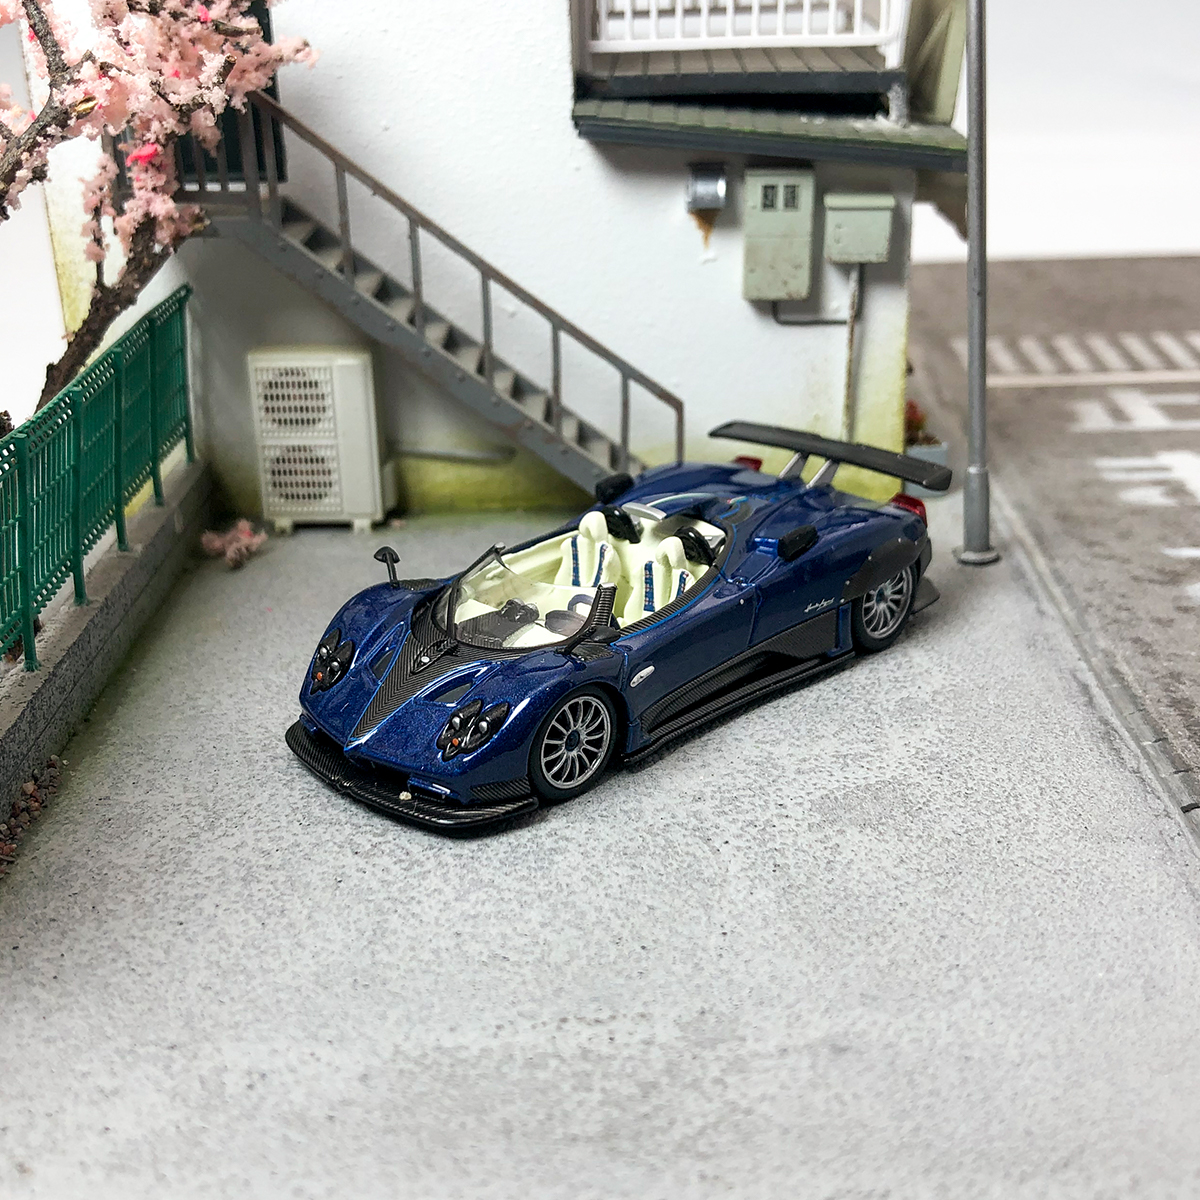 MINI GT 1:64 帕加尼 Pagani Zonda 敞篷 蓝色合金汽车模型  收藏